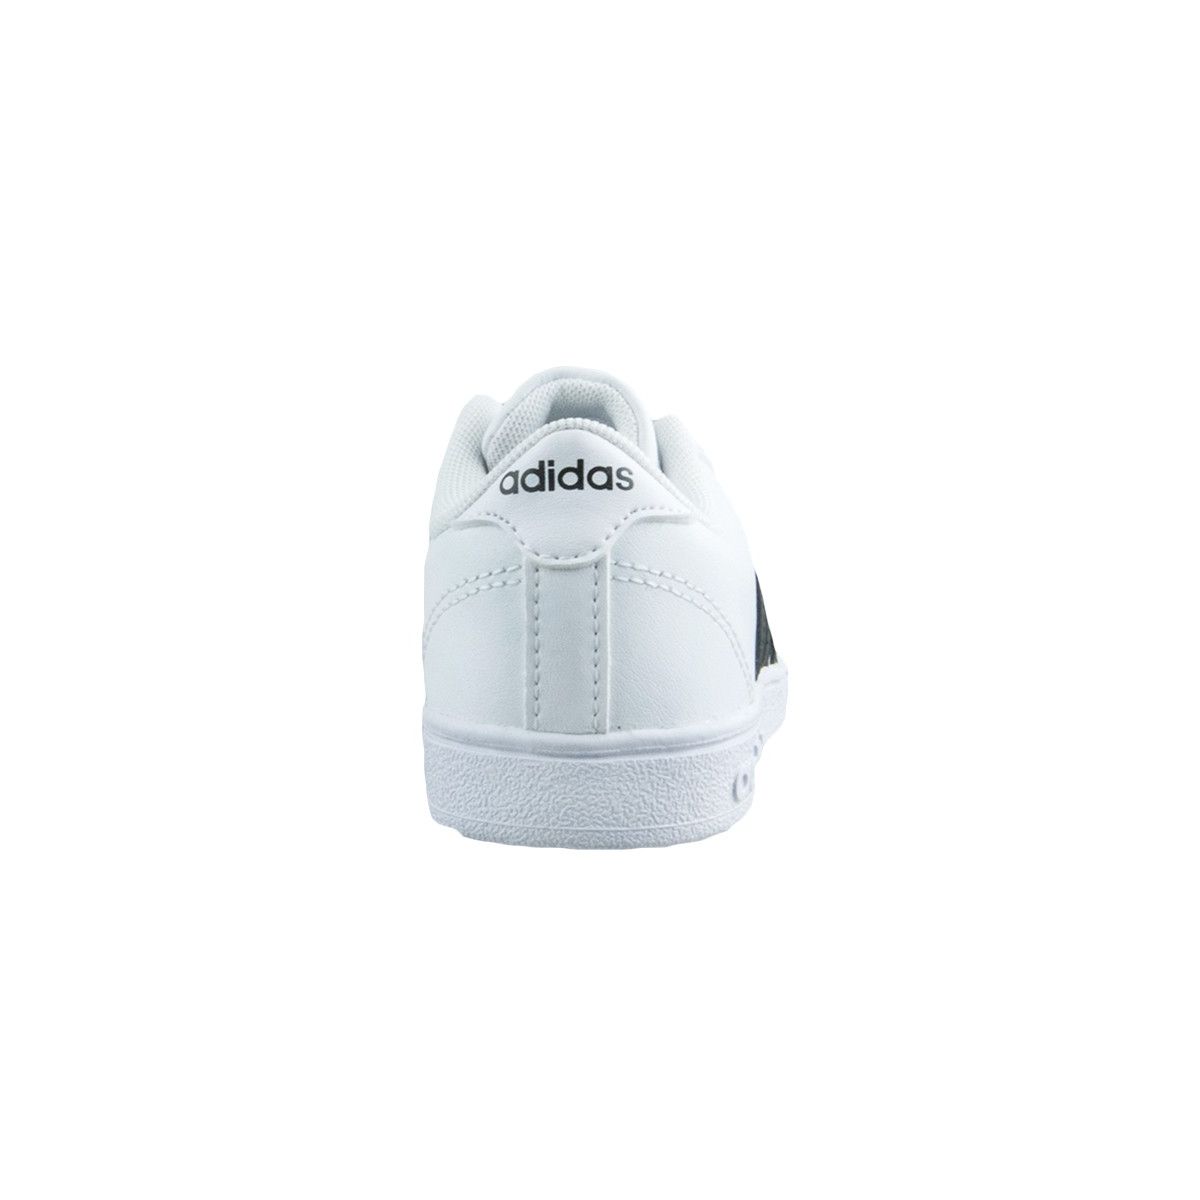 Adidas Αθλητικο Παπουτσι Unisex Baseline K AW4299 - ΛΕΥΚΟ-ΜΑΥΡΟ